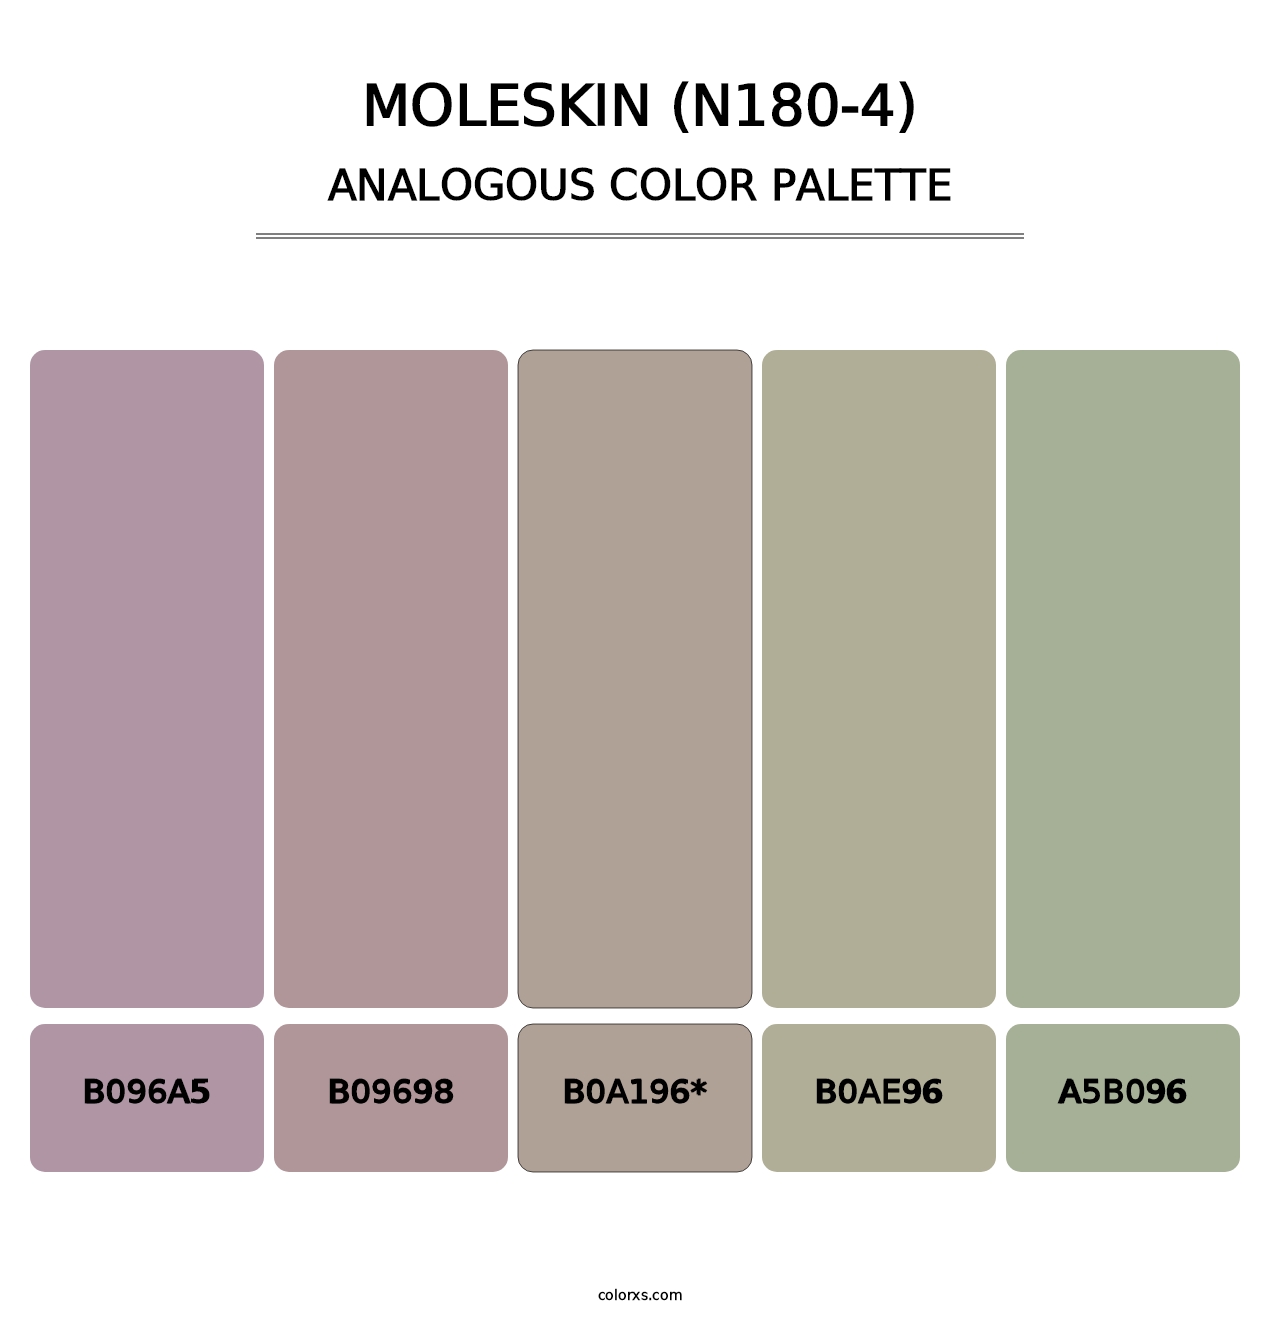 Moleskin (N180-4) - Analogous Color Palette